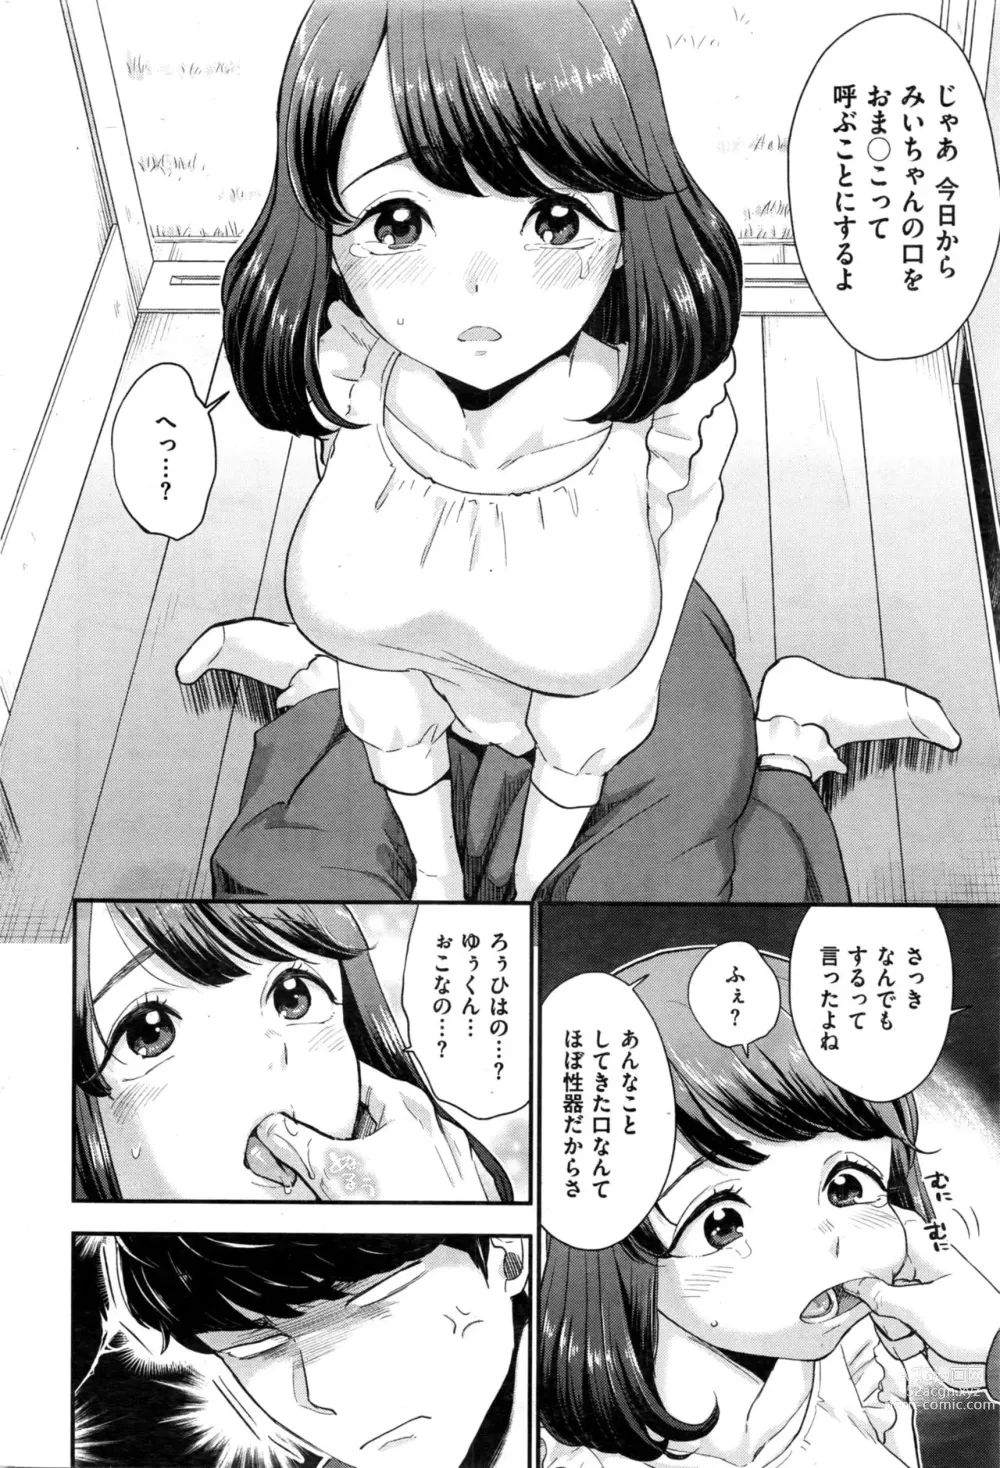 Page 4 of manga Masaka Sakasama